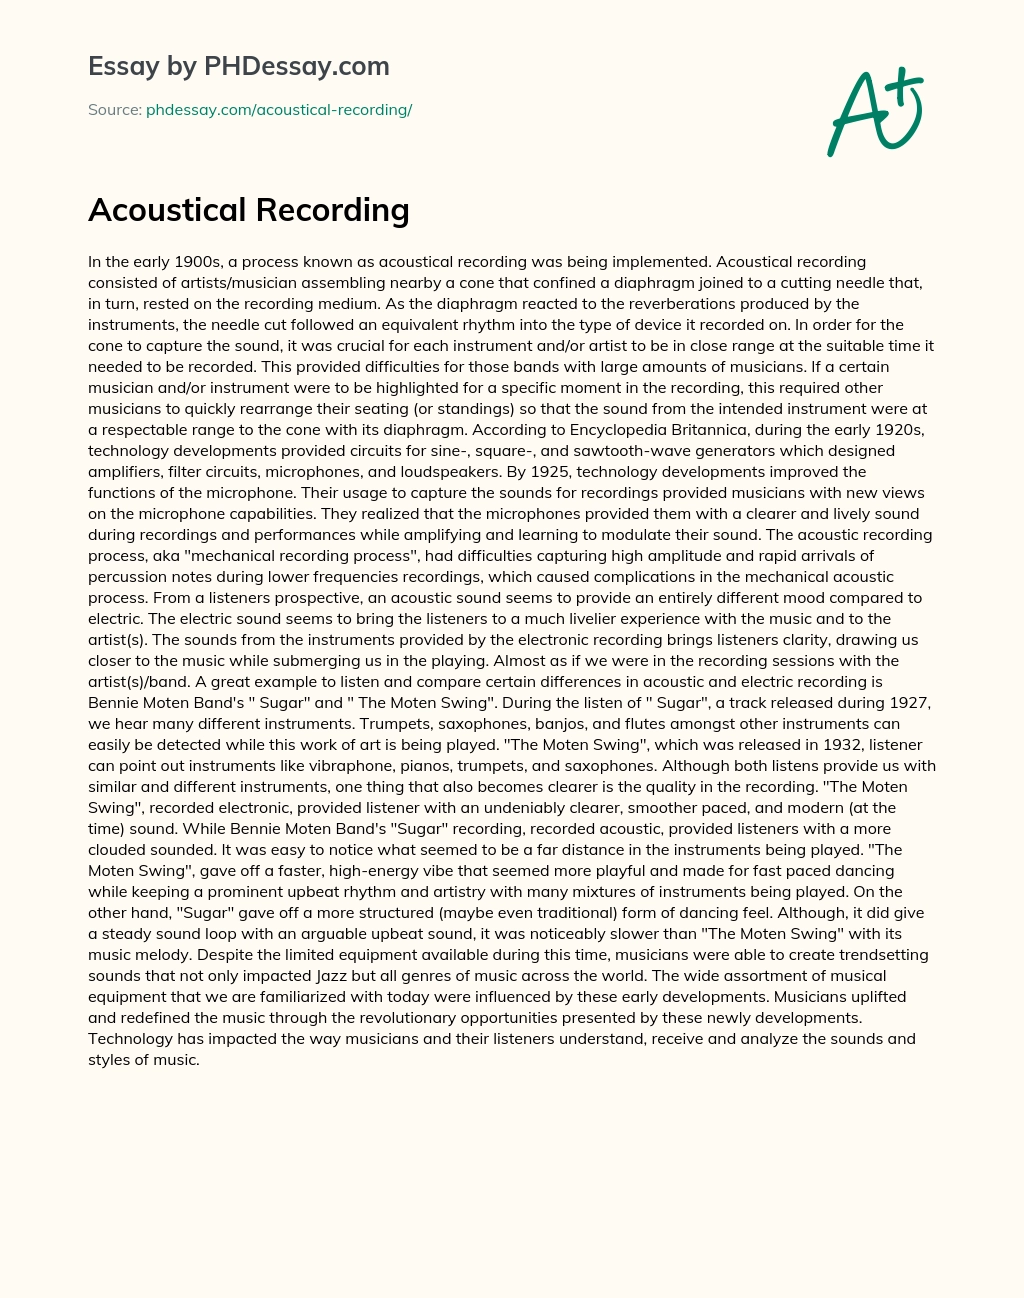 Acoustical Recording essay